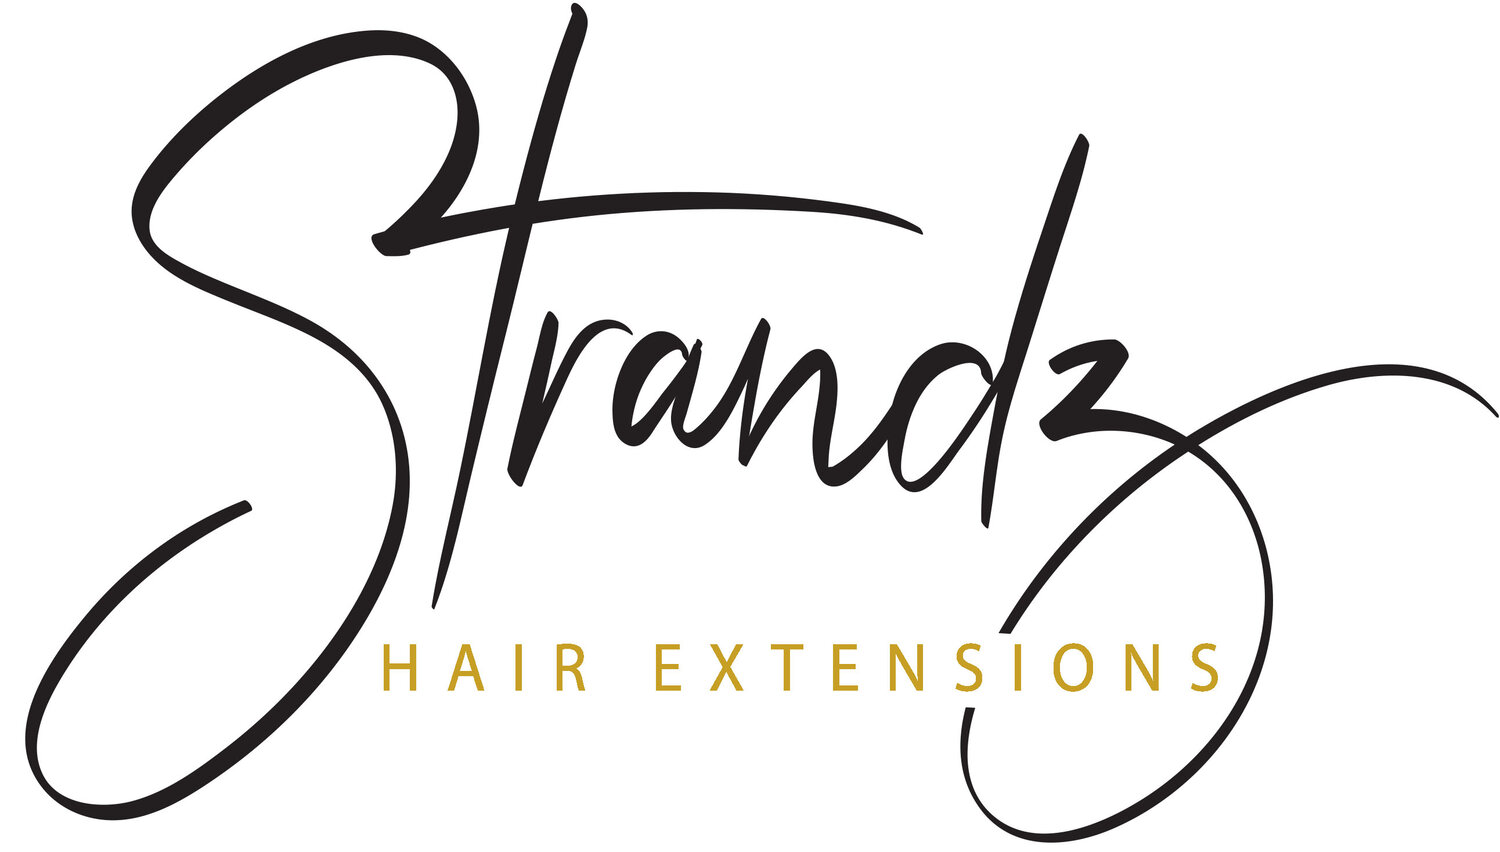 Strandz Hair Extensions